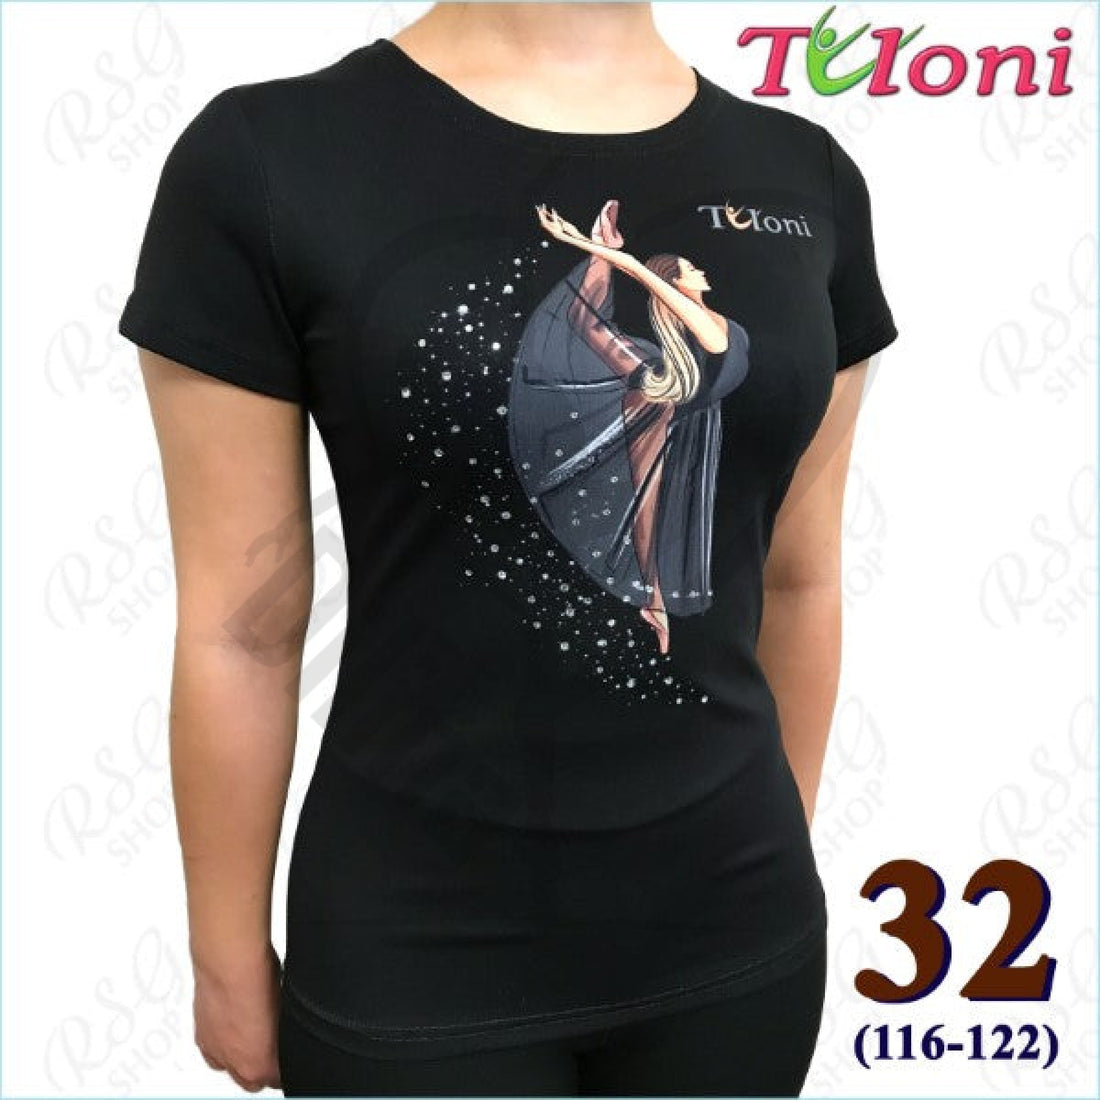 Tuloni Black T-Shirt Mod. Ballet 32 (116-122) T Shirts & Tops